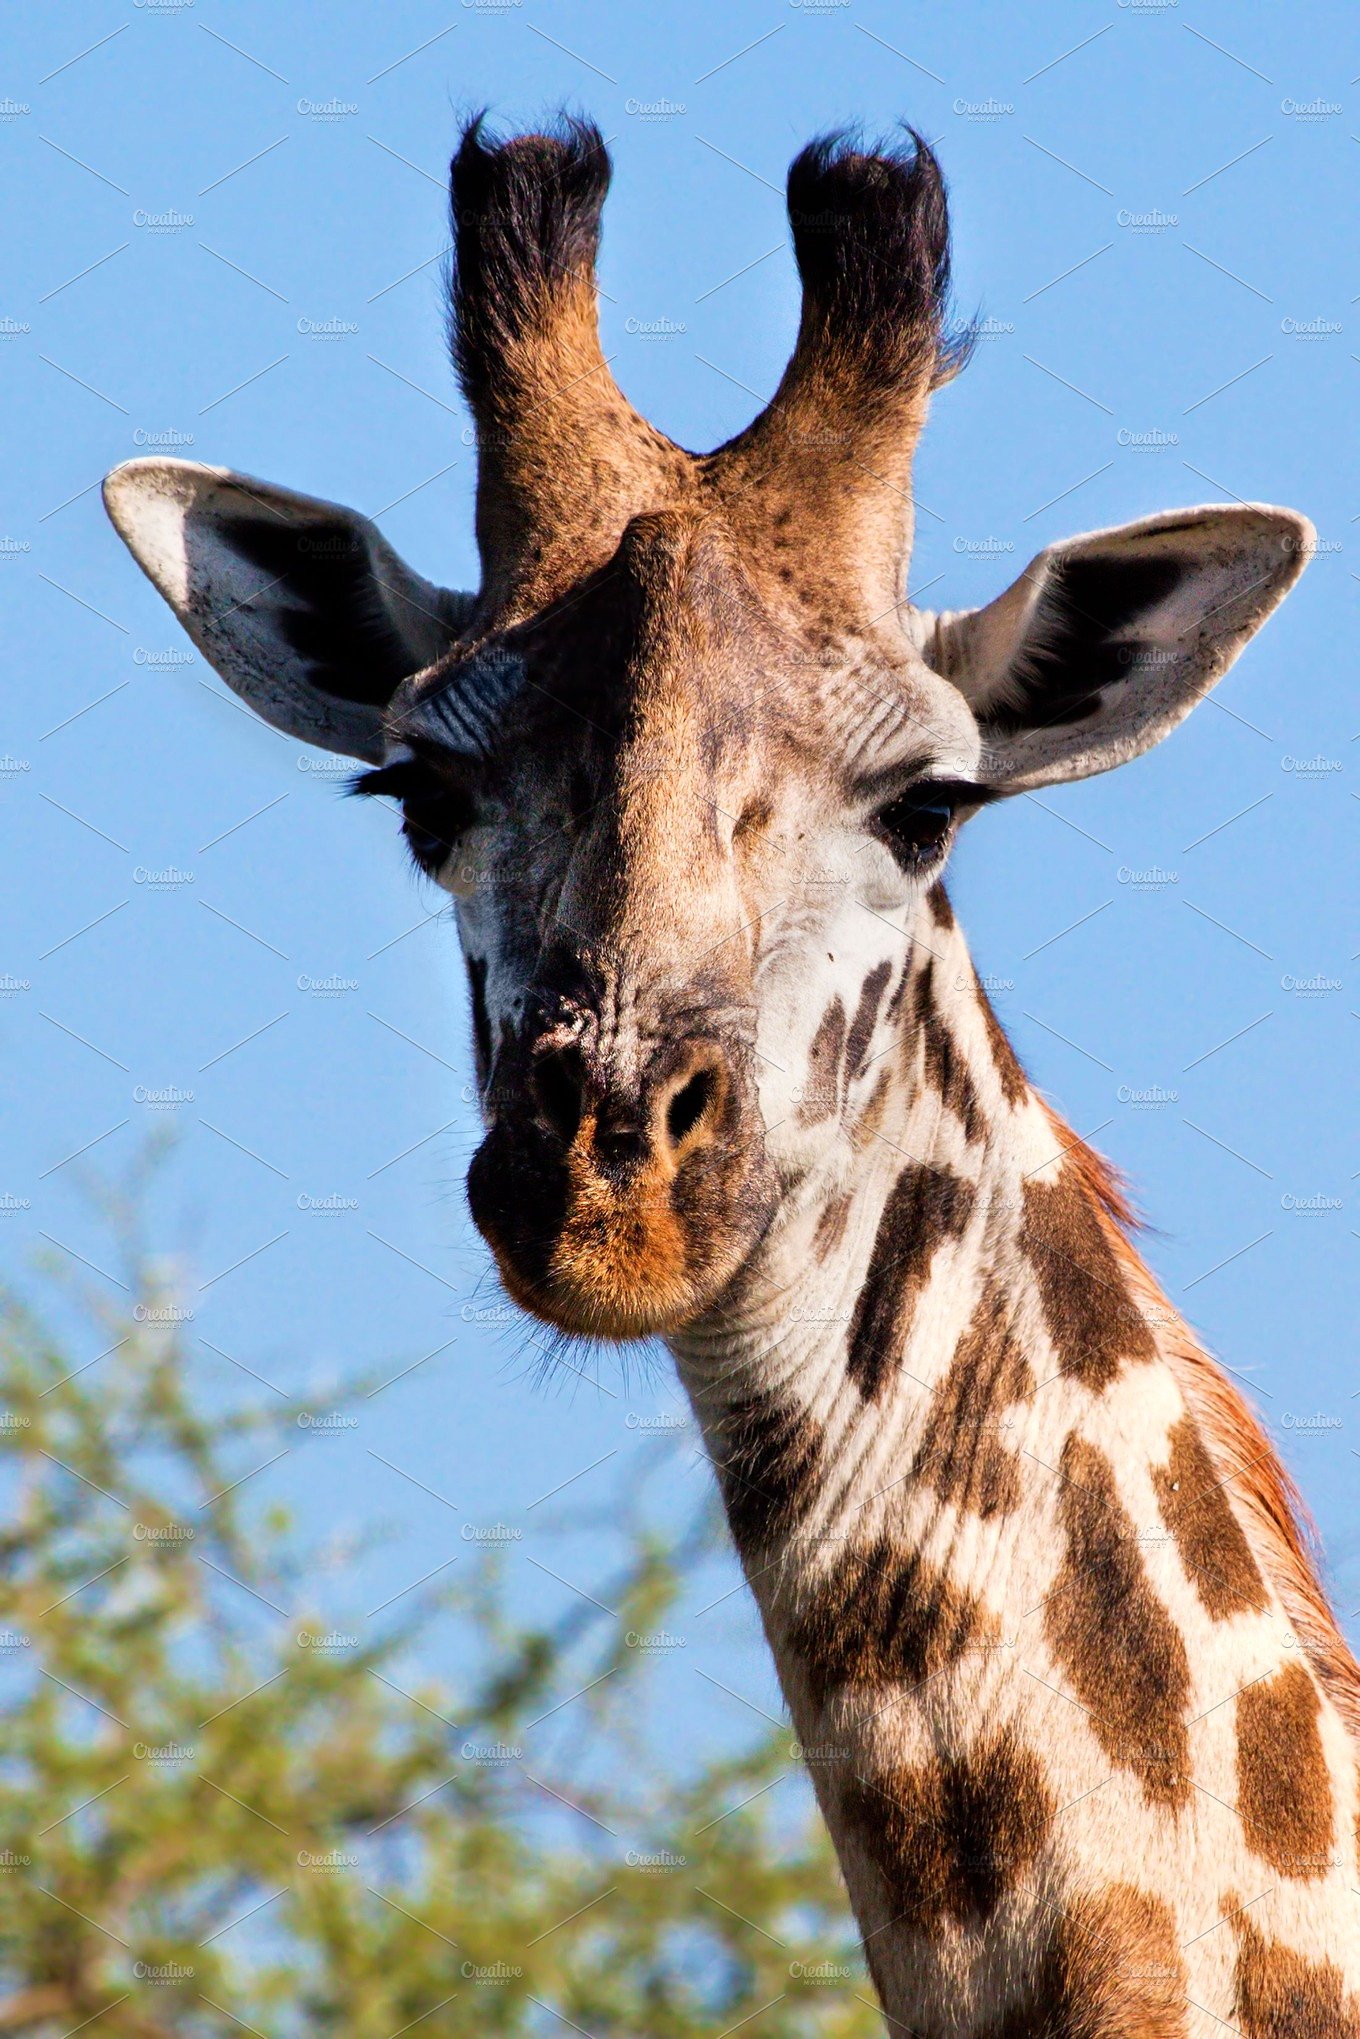 Giraffe portrait, Tanzania, Africa ~ Animal Photos ~ Creative Market